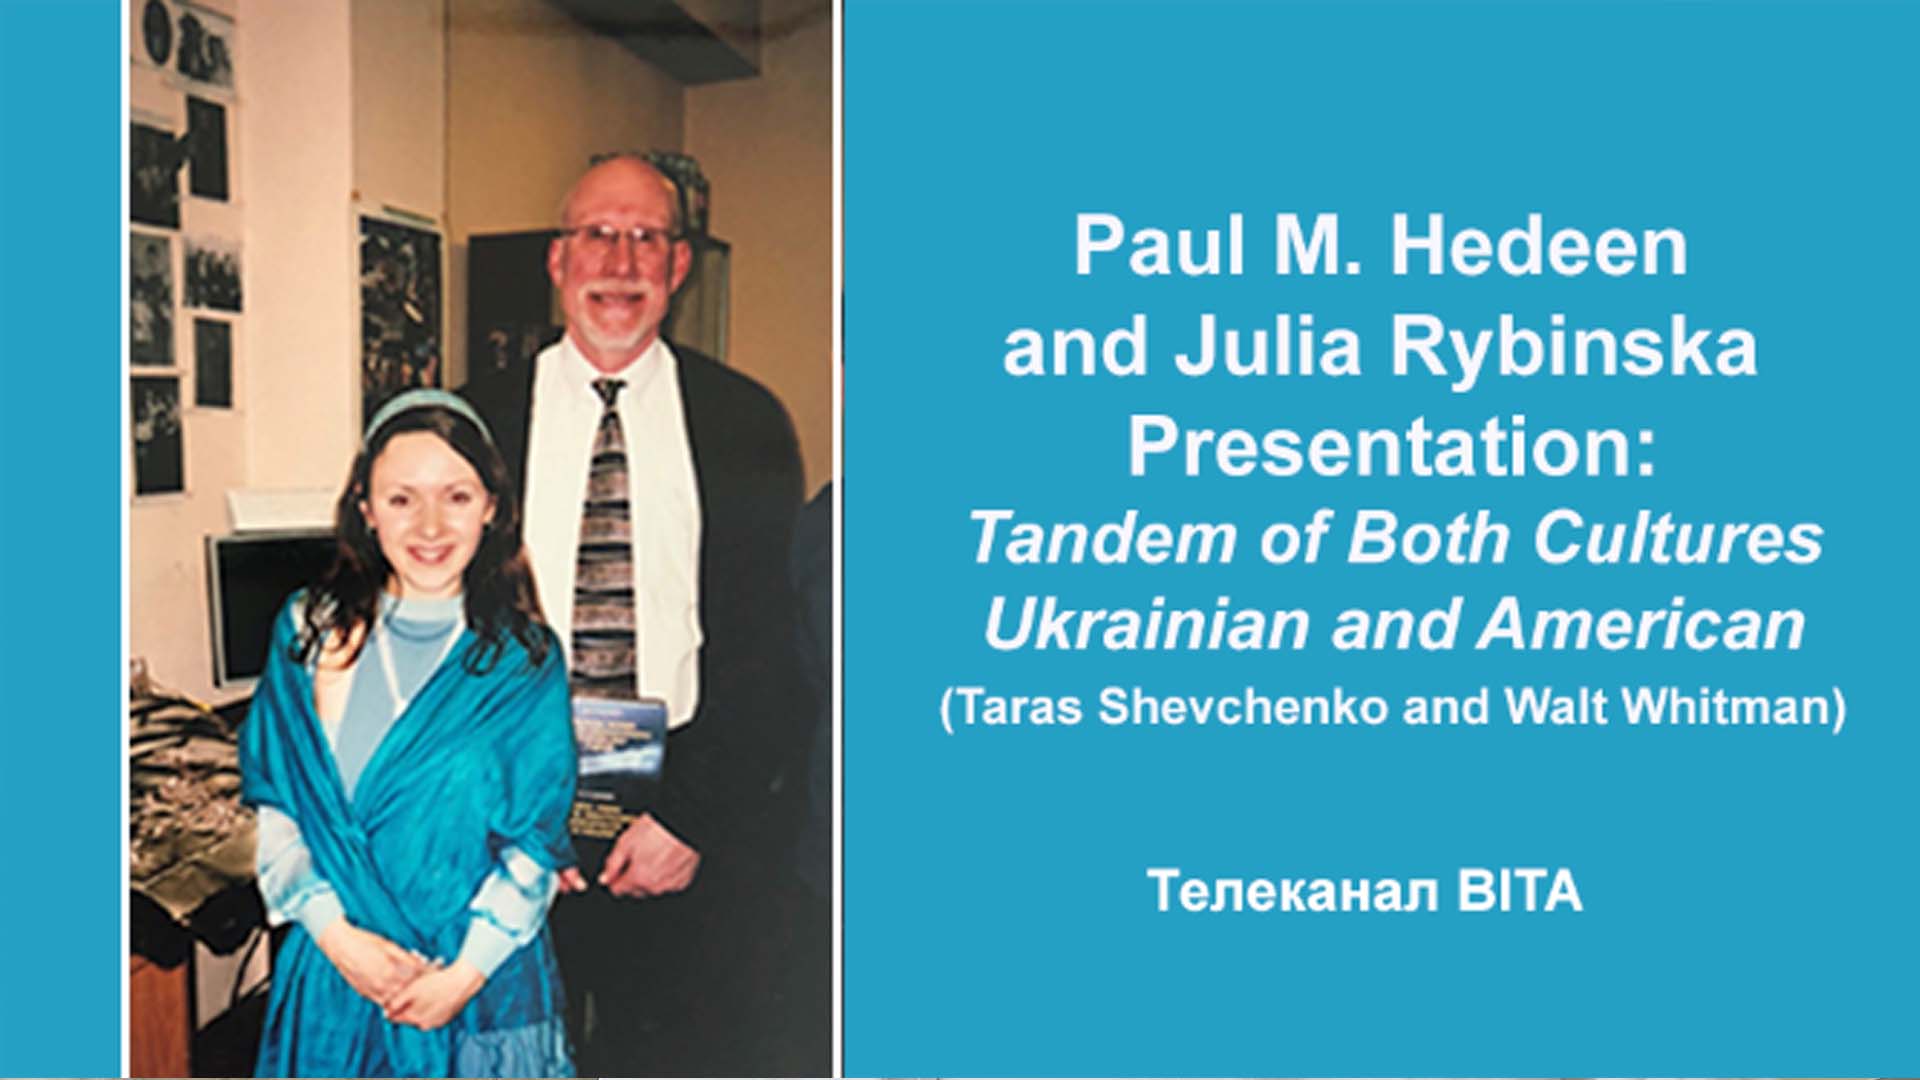 Paul M. Hedeen and Julia Rybinska Presentation: Tandem of Both Cultures Ukrainian and American (T. Shevchenko and W. Whitman)